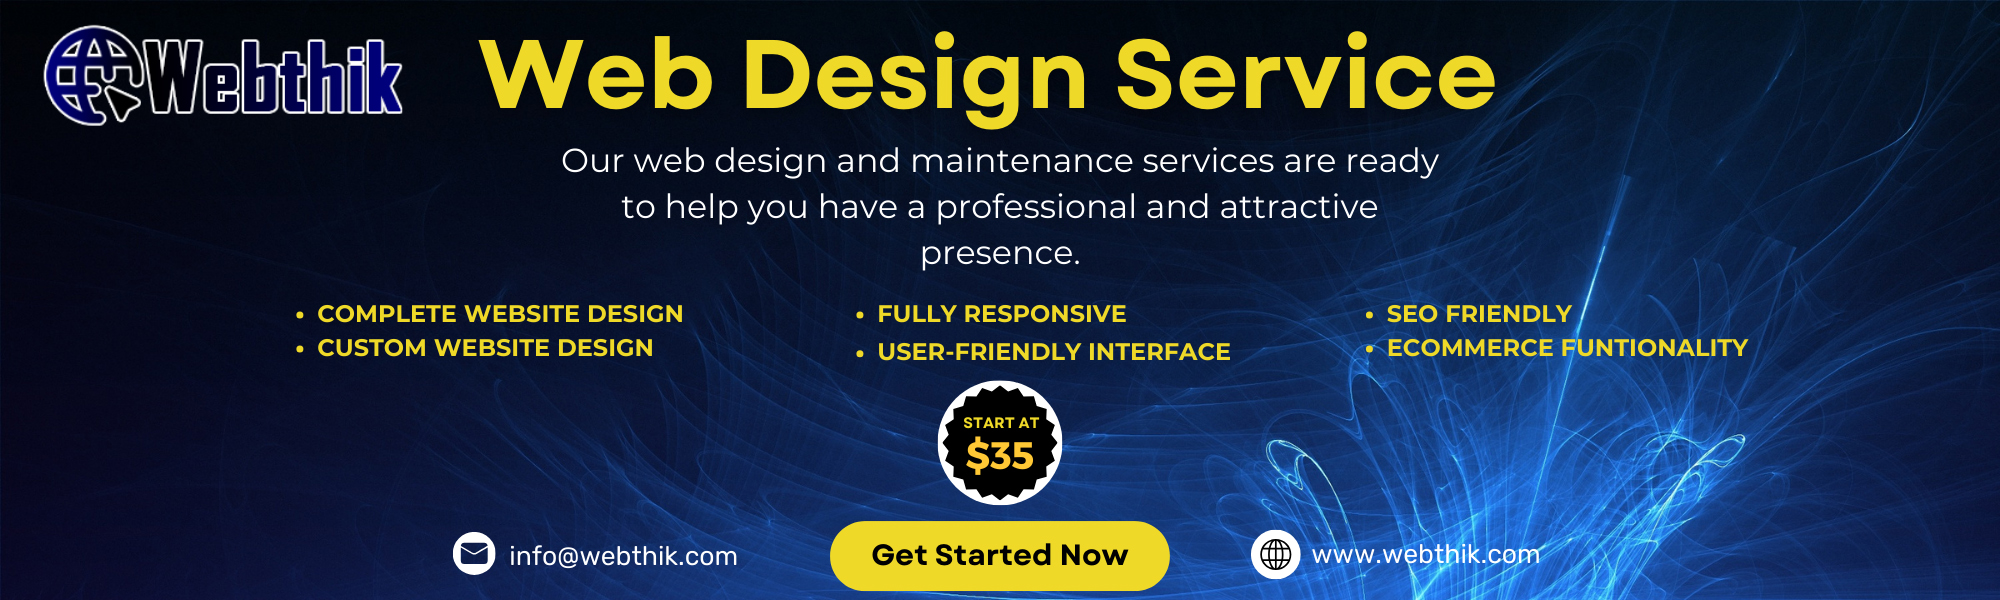 Web Design Services - Webthik (Banner)